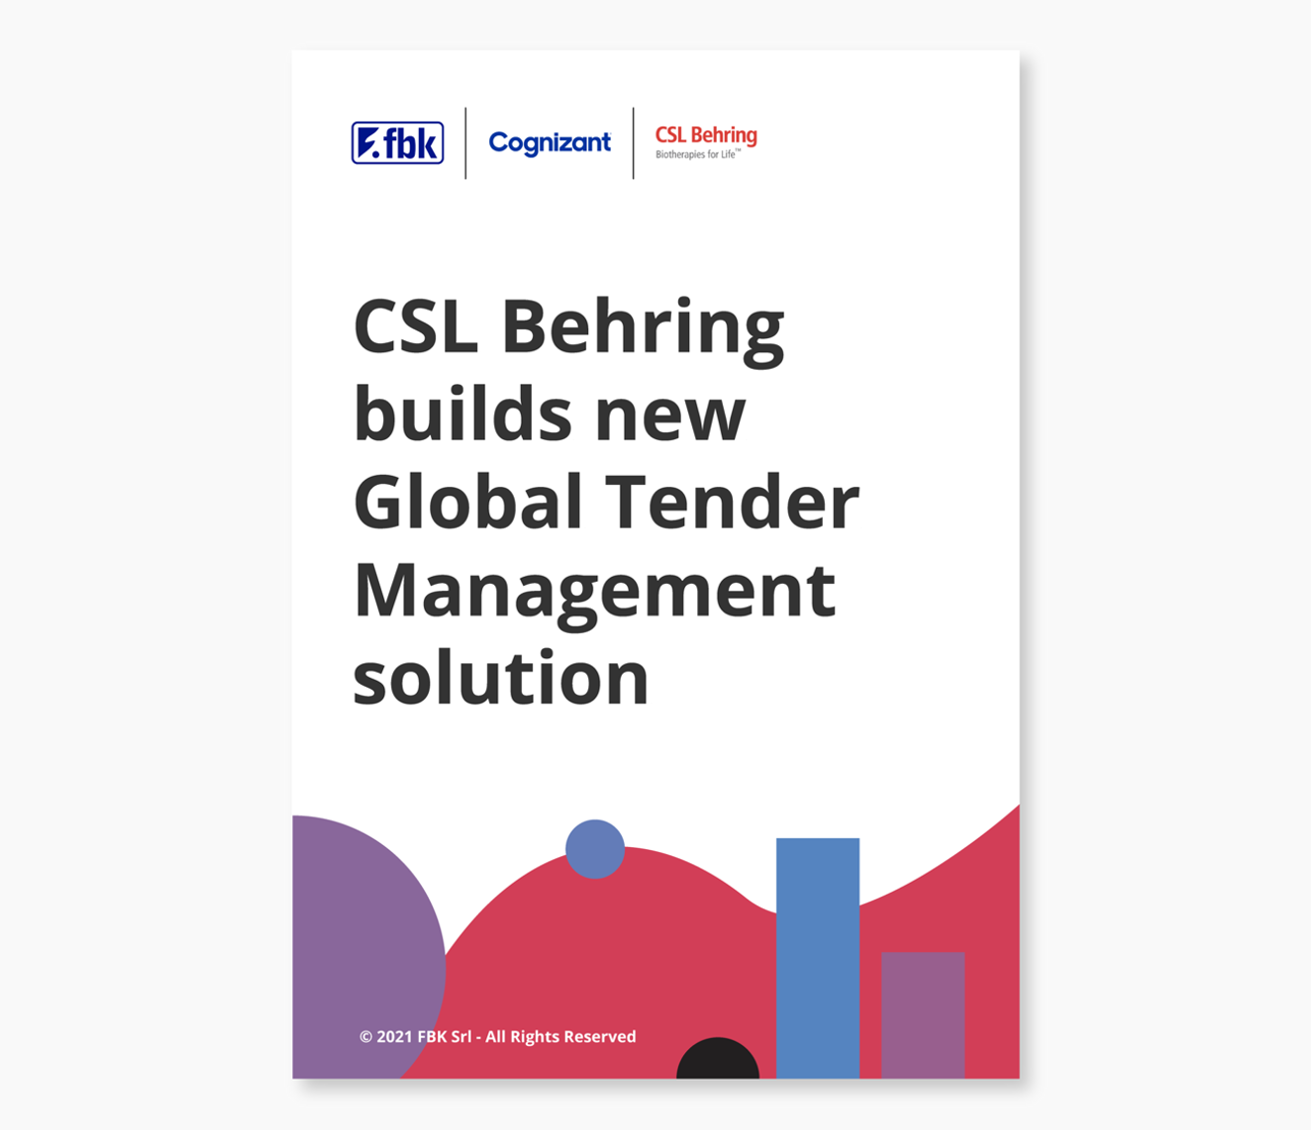 CSL Behring builds new Global Tender Management solution